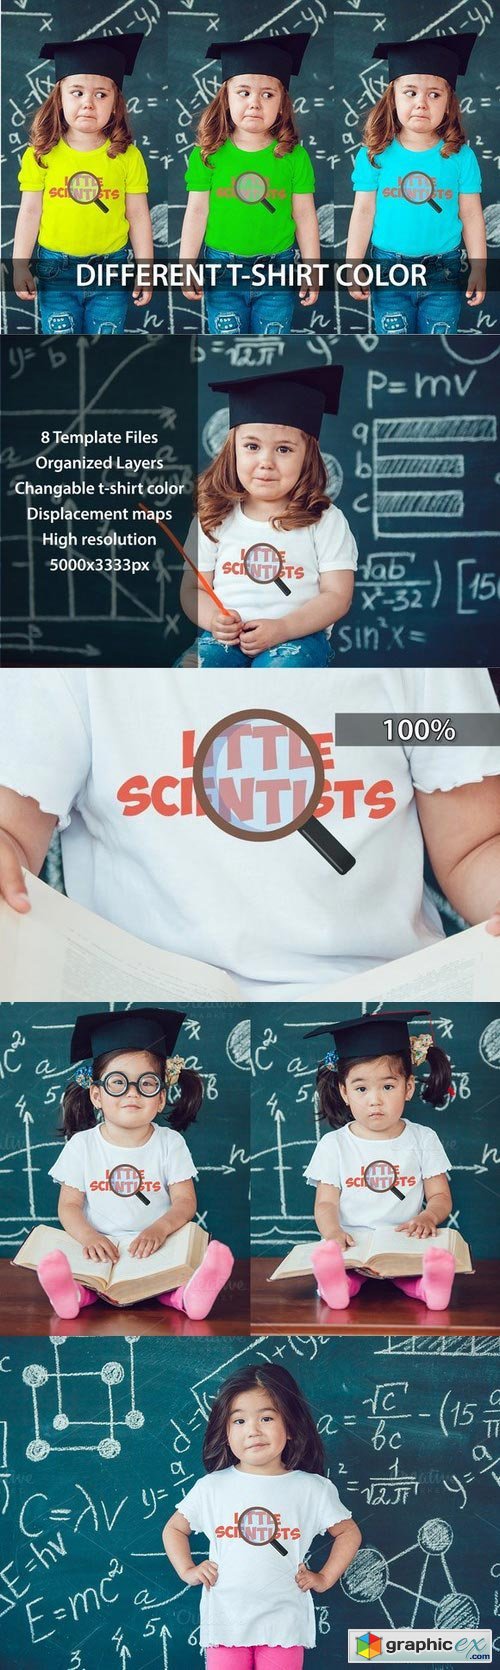 Little Scientists T-Shirt Mock-Up